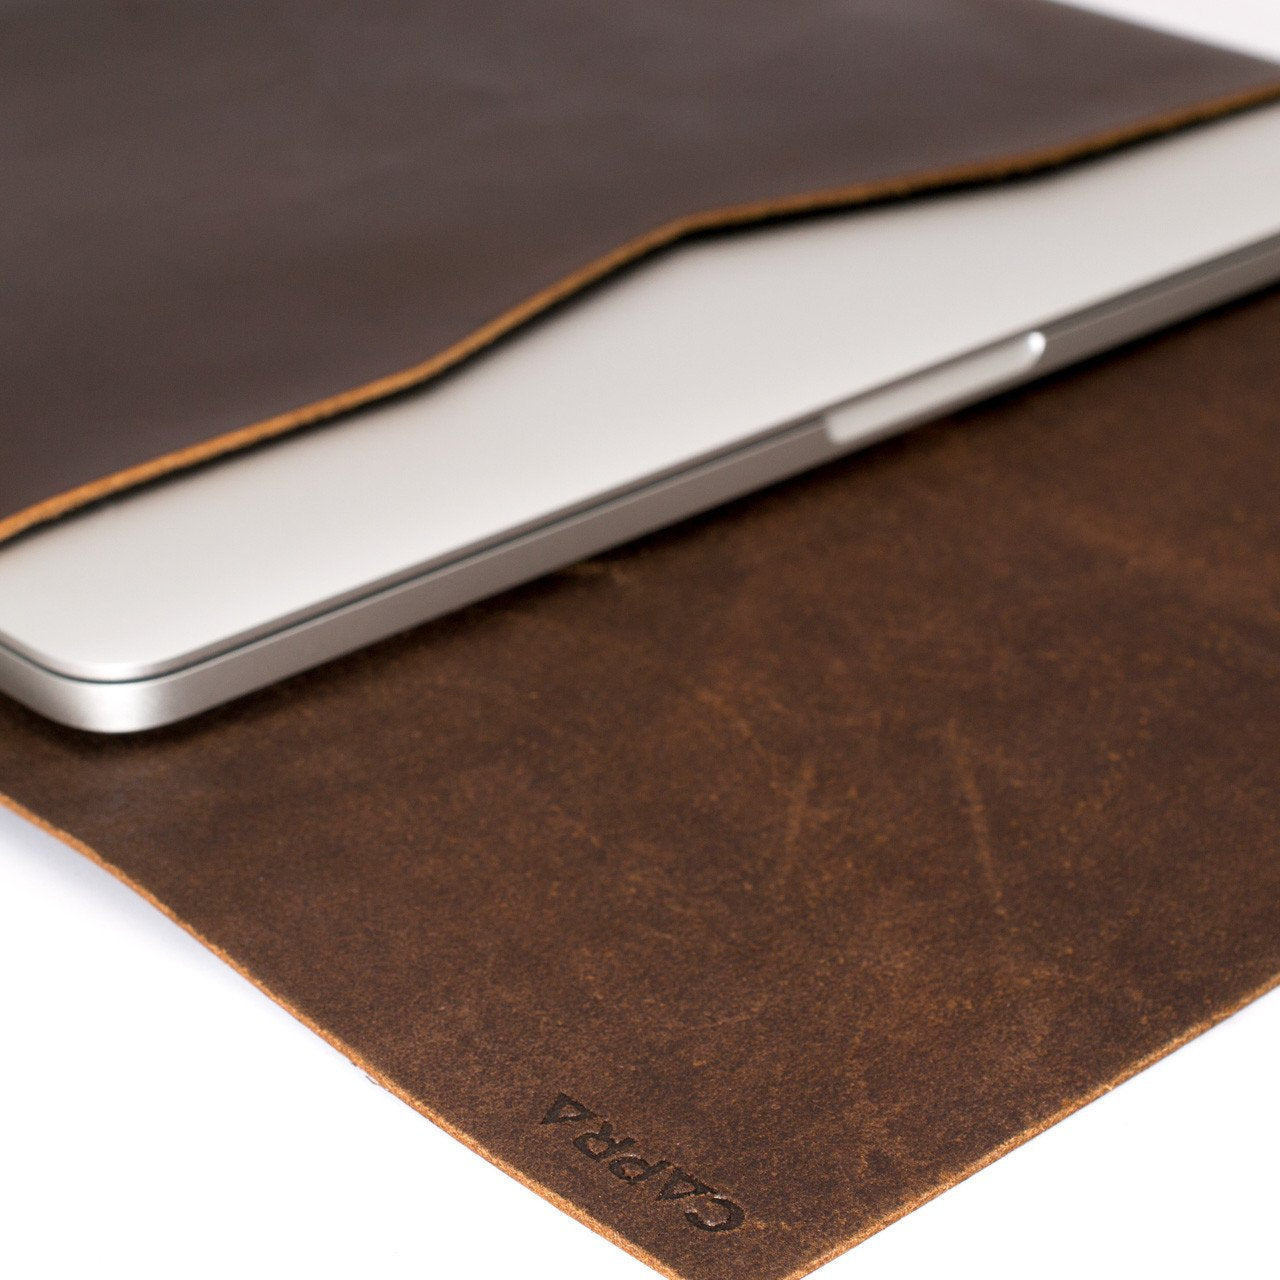  Closed dark leather case for Google Pixelbook laptop